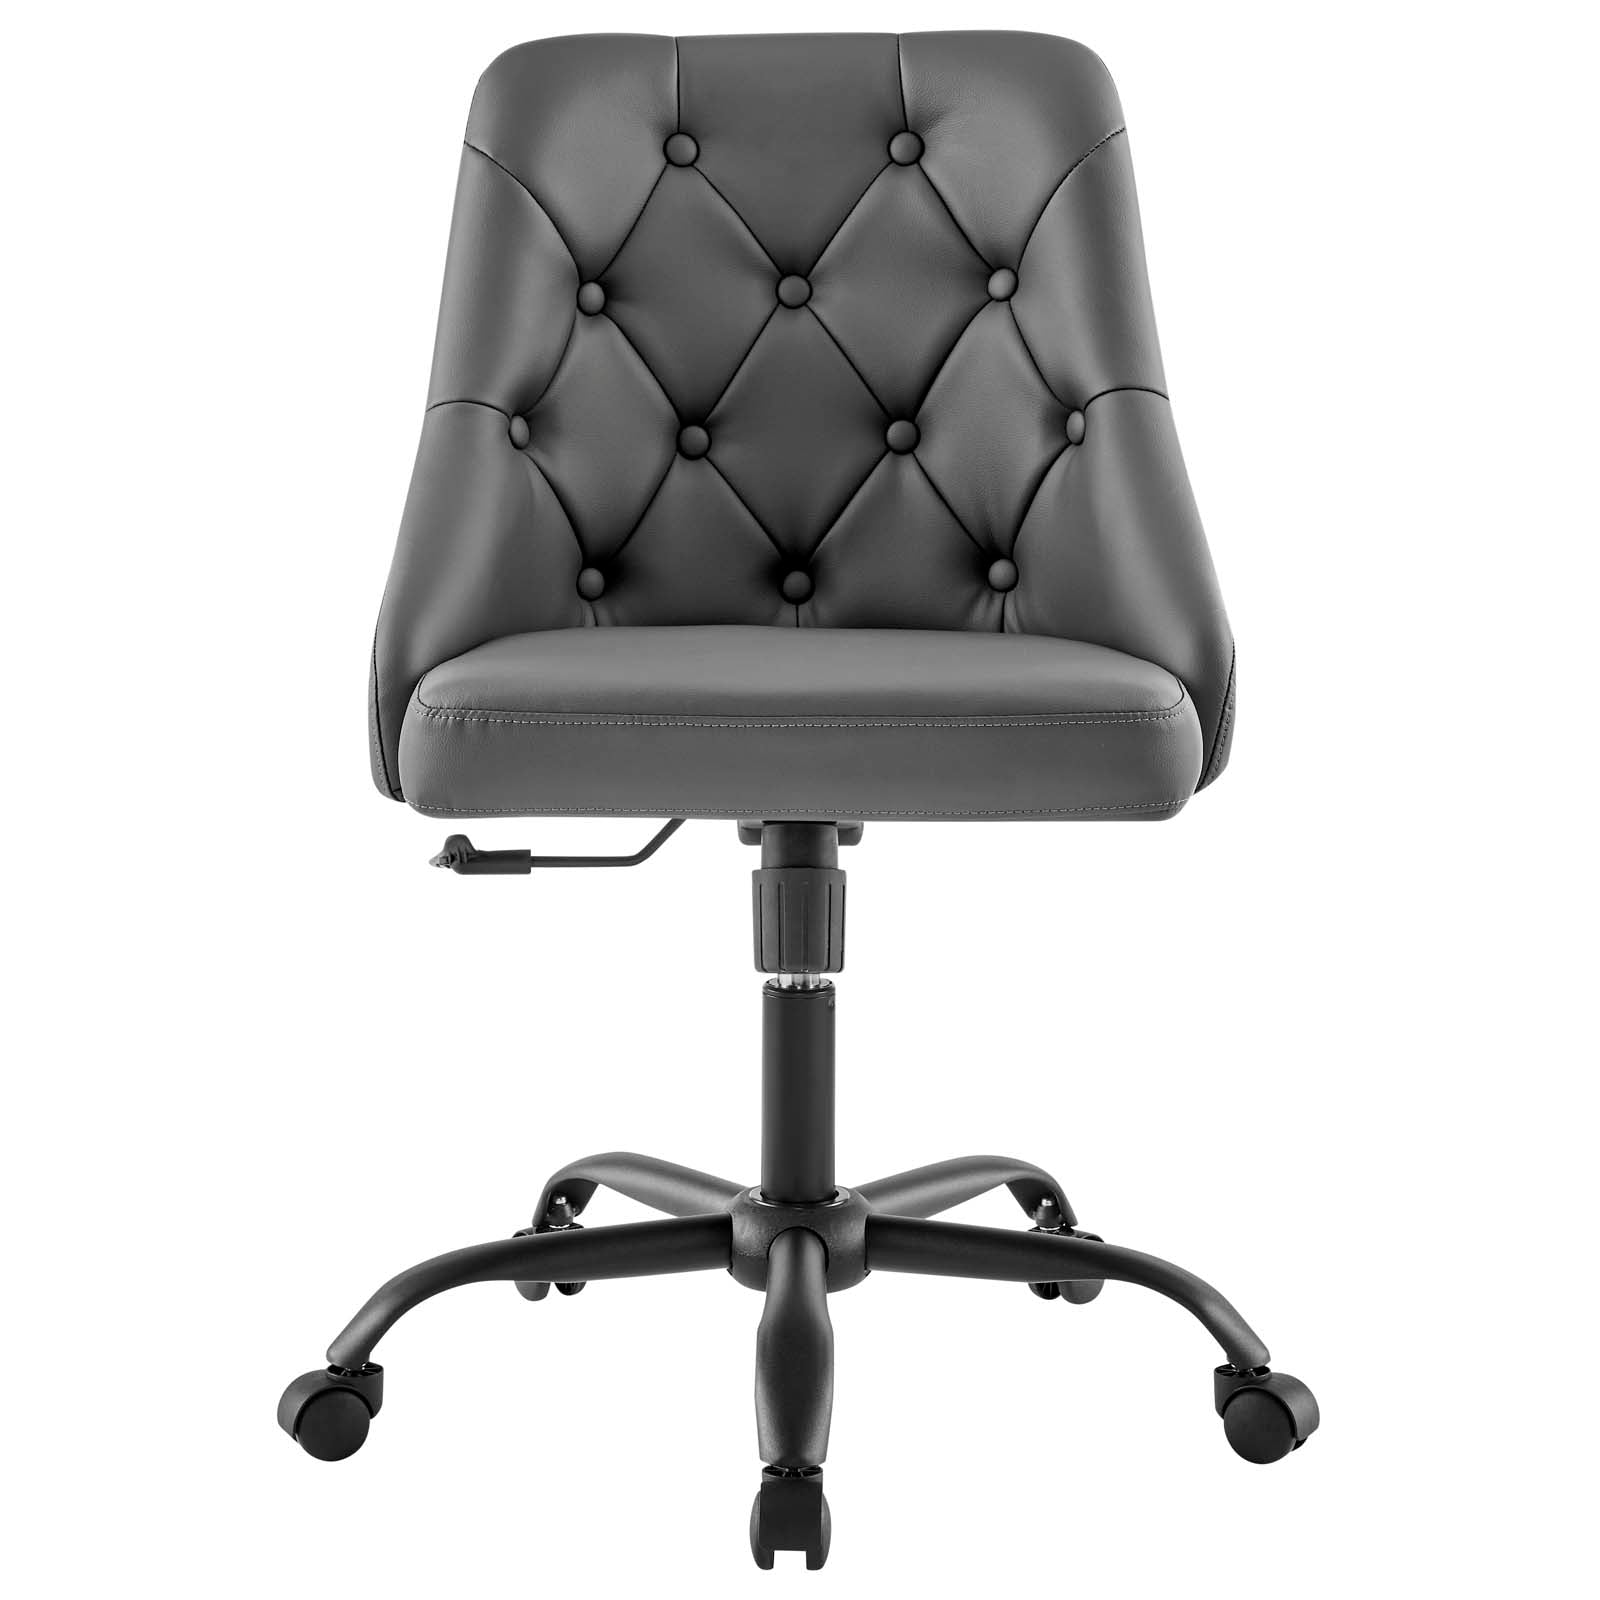 Distinct Tufted Swivel Vegan Leather Office Chair - East Shore Modern Home Furnishings